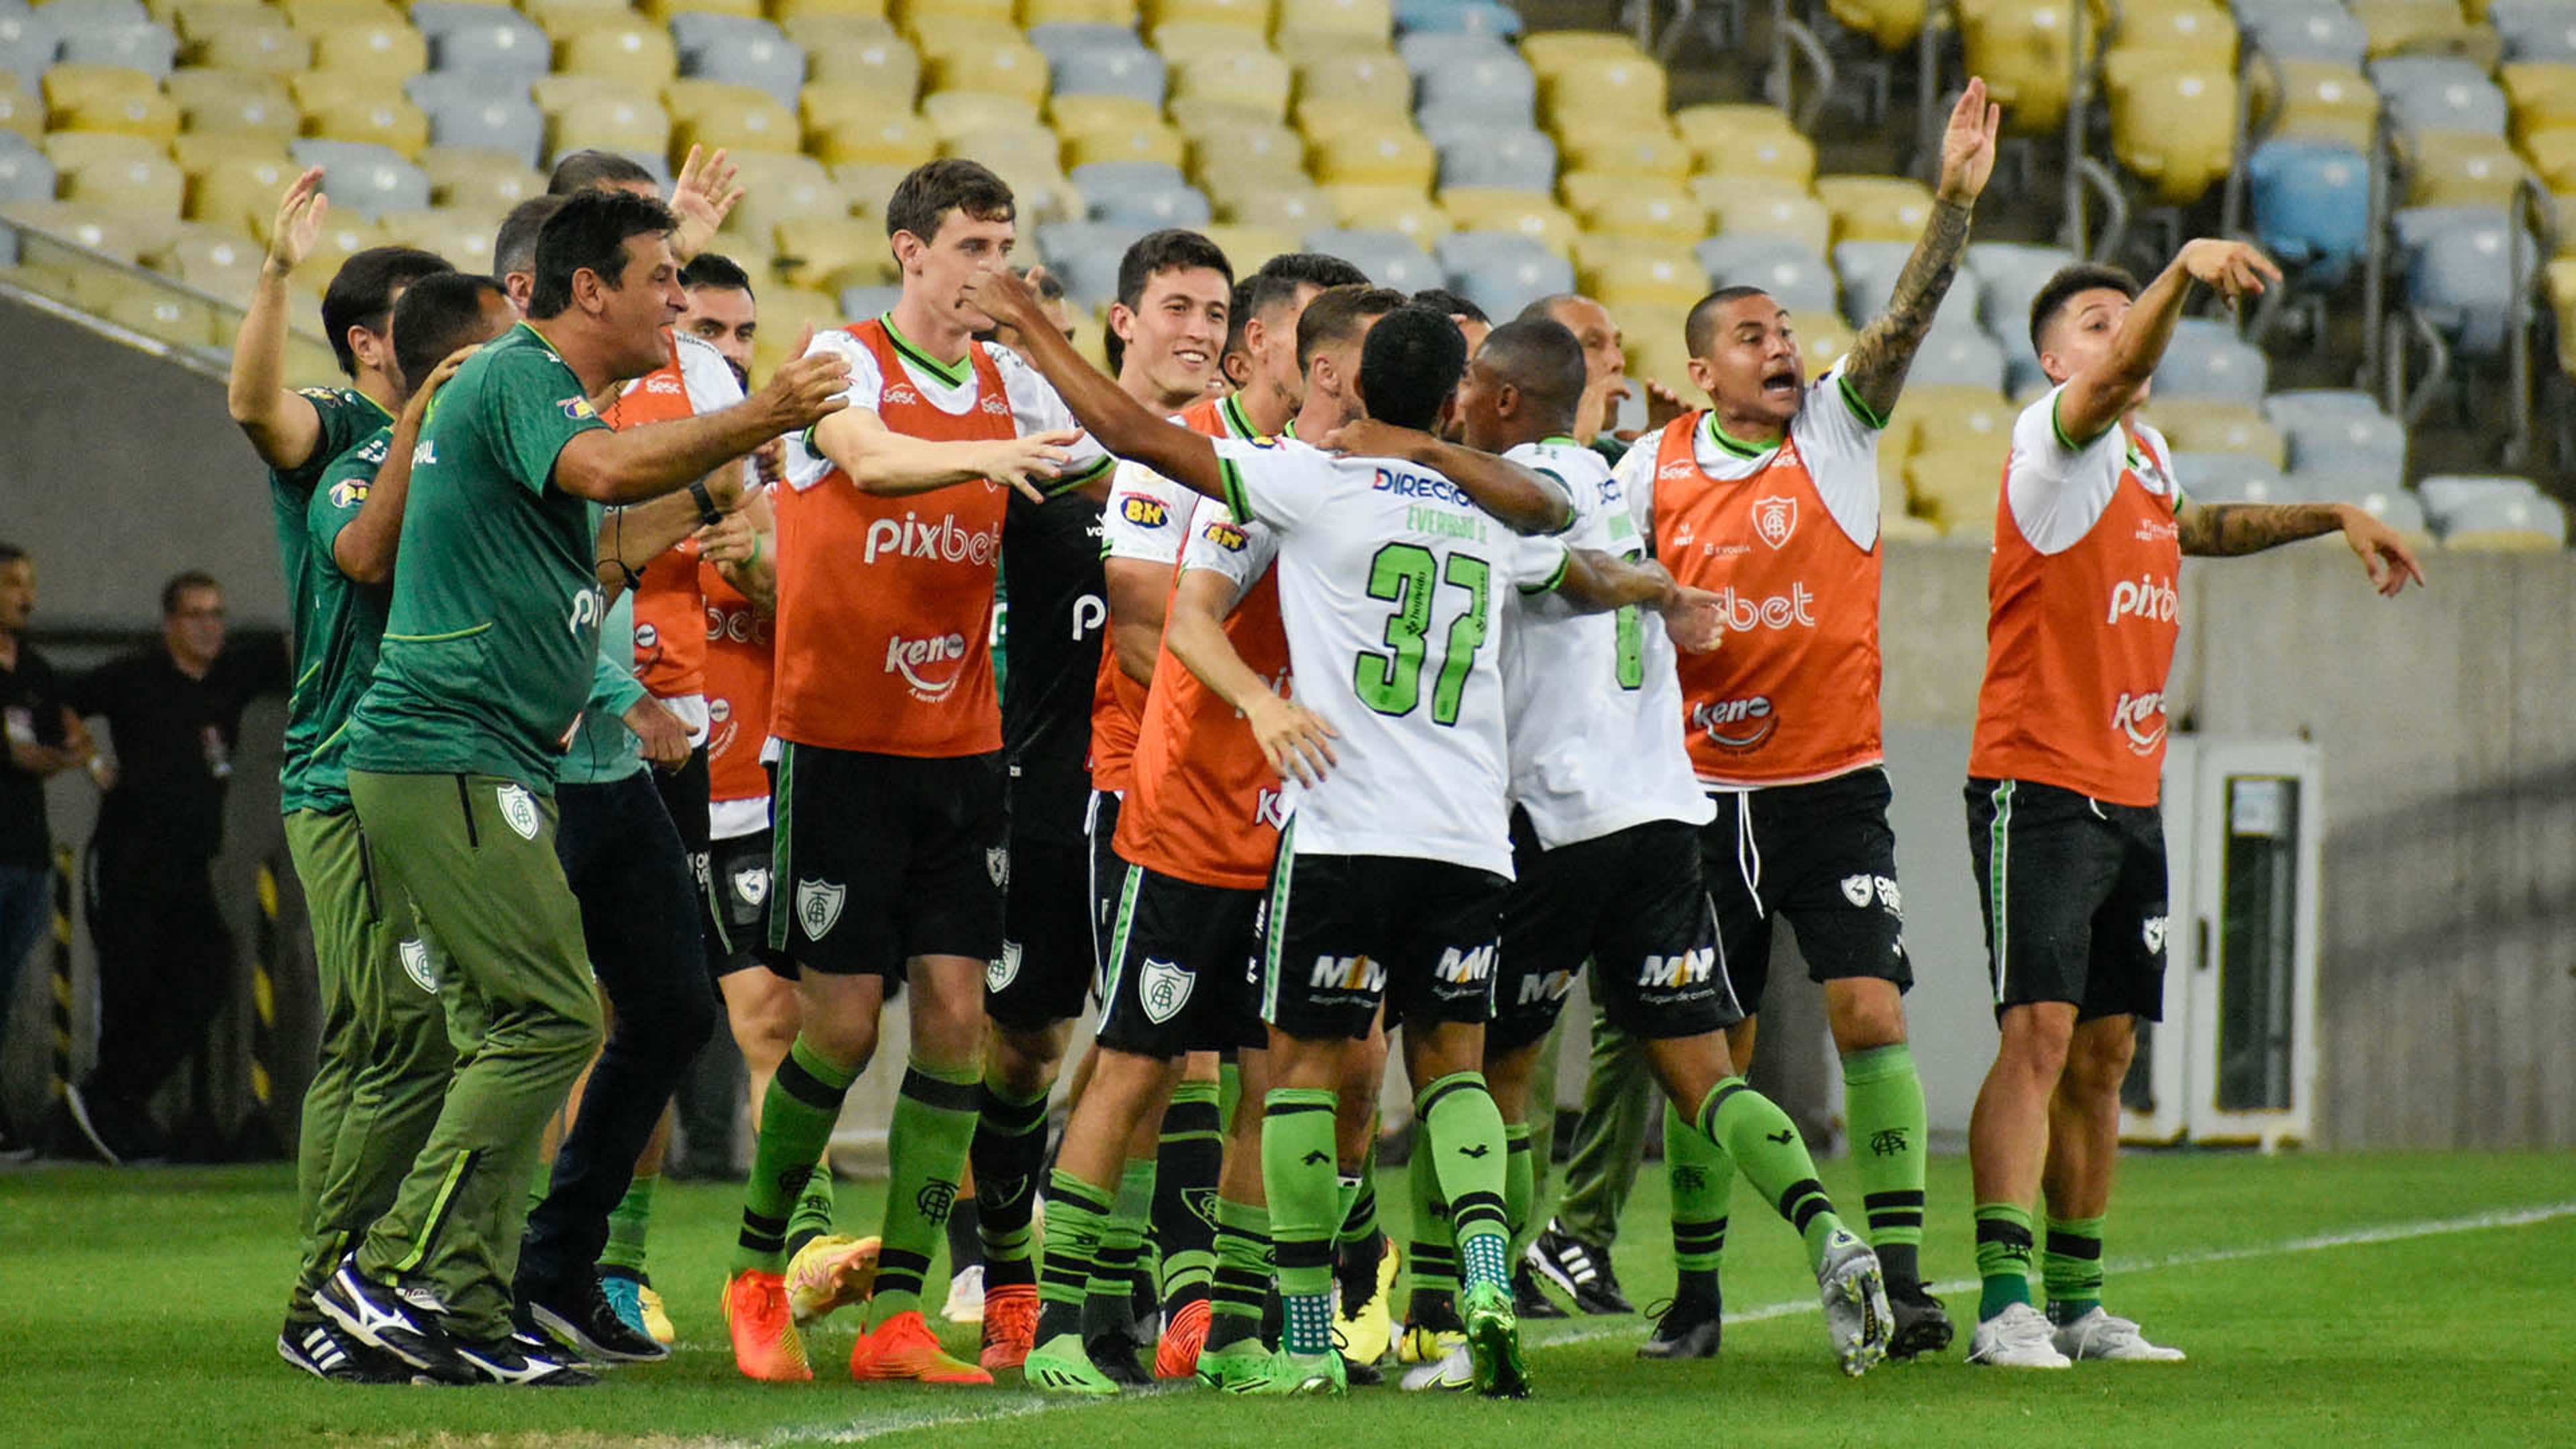 Tombense vs Vila Nova: A Clash of Two Strong Football Teams